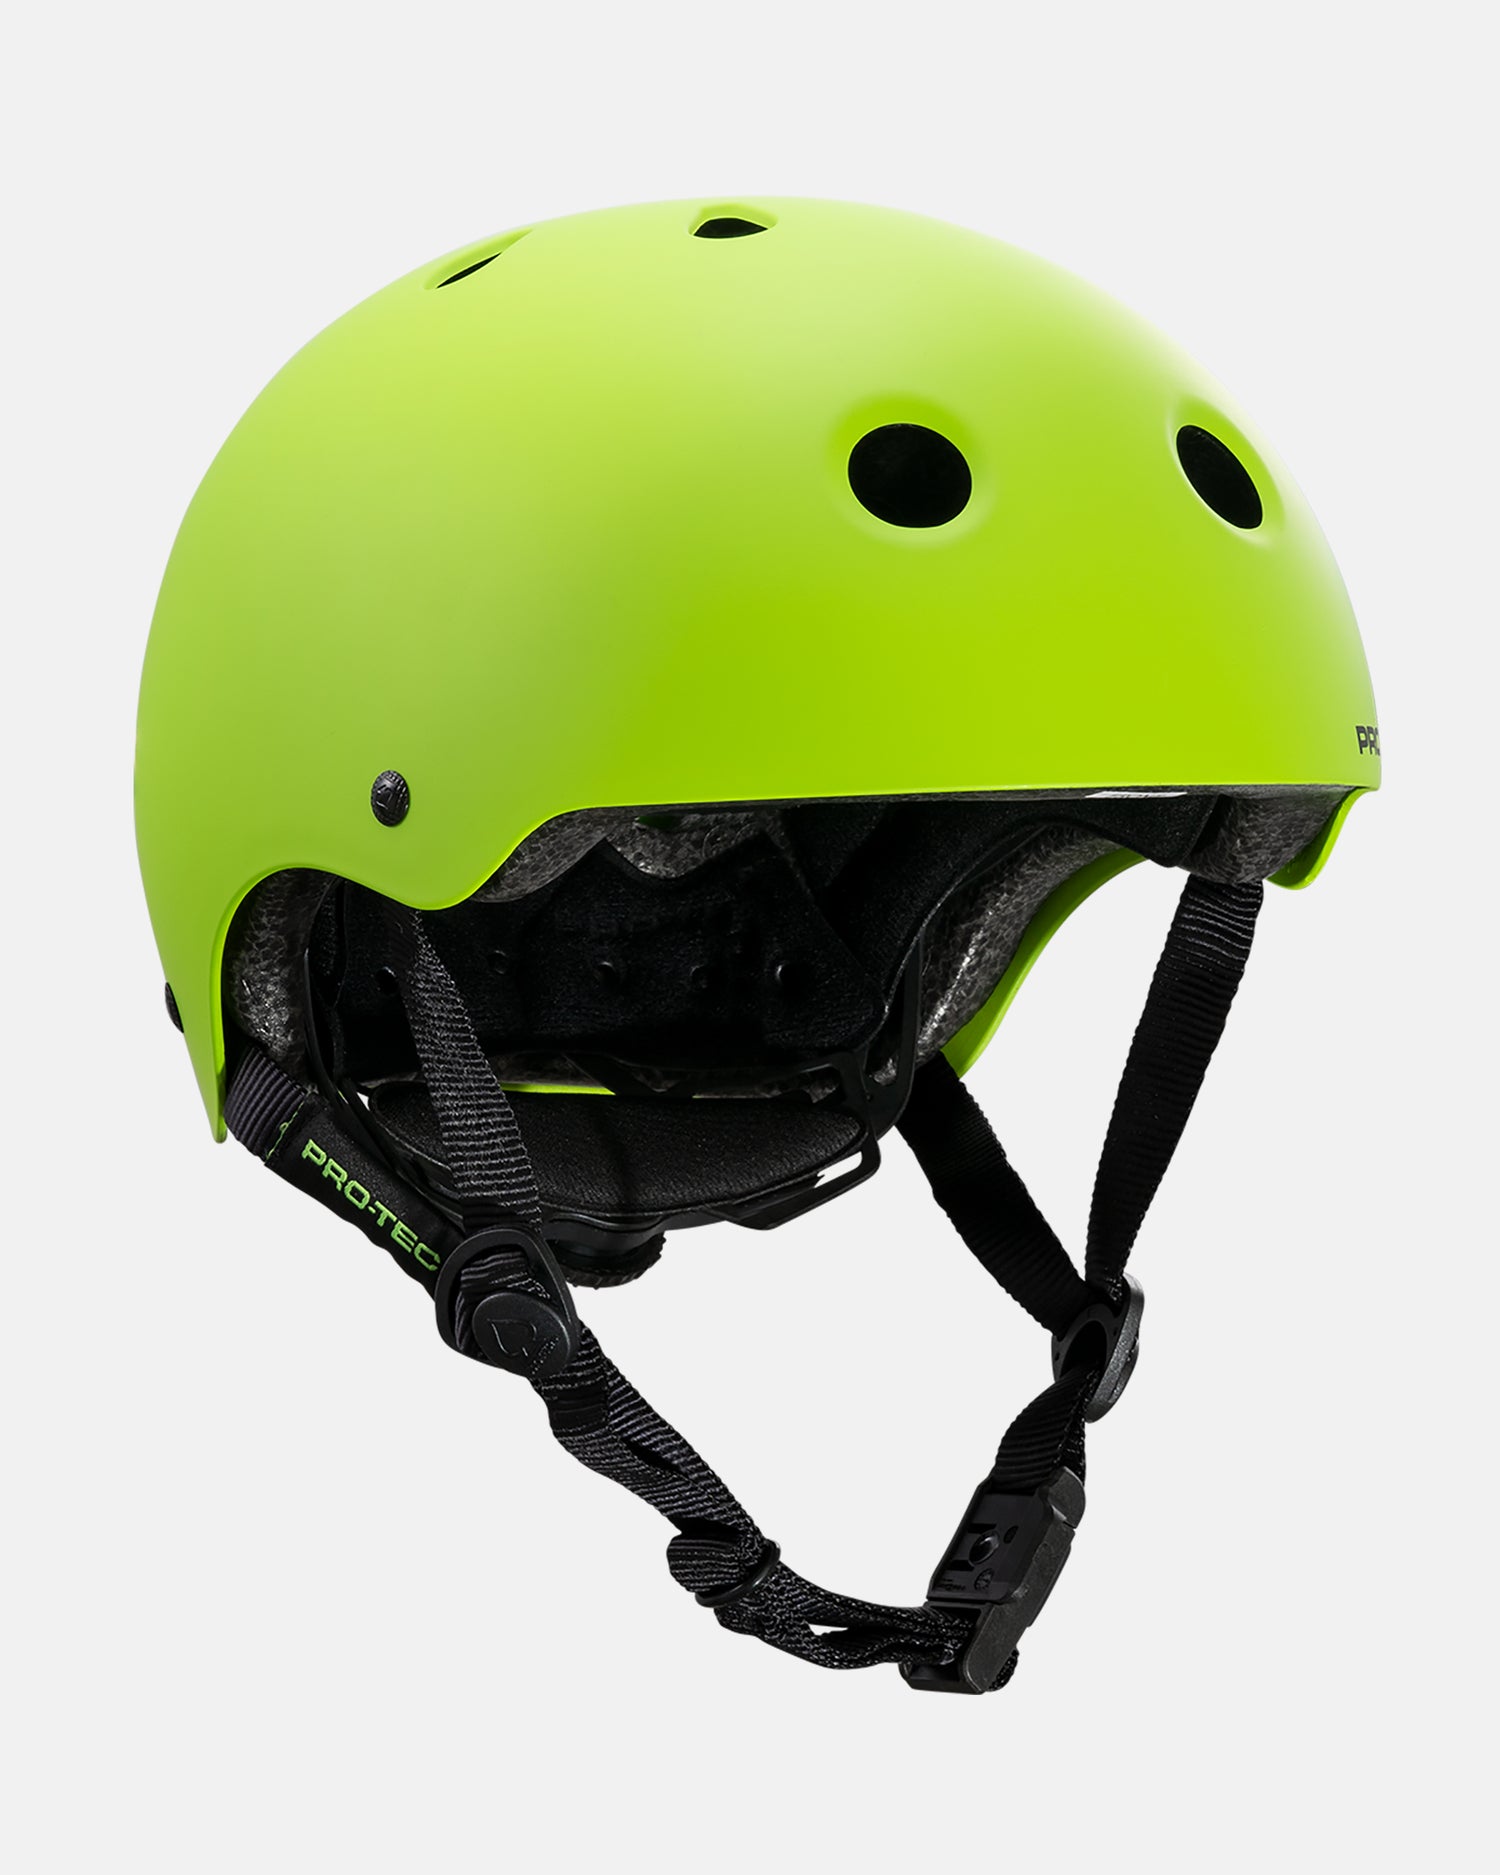 Protec Junior Classic Fit Helmet (Certified) - Matte Lime - Impala Rollerskates